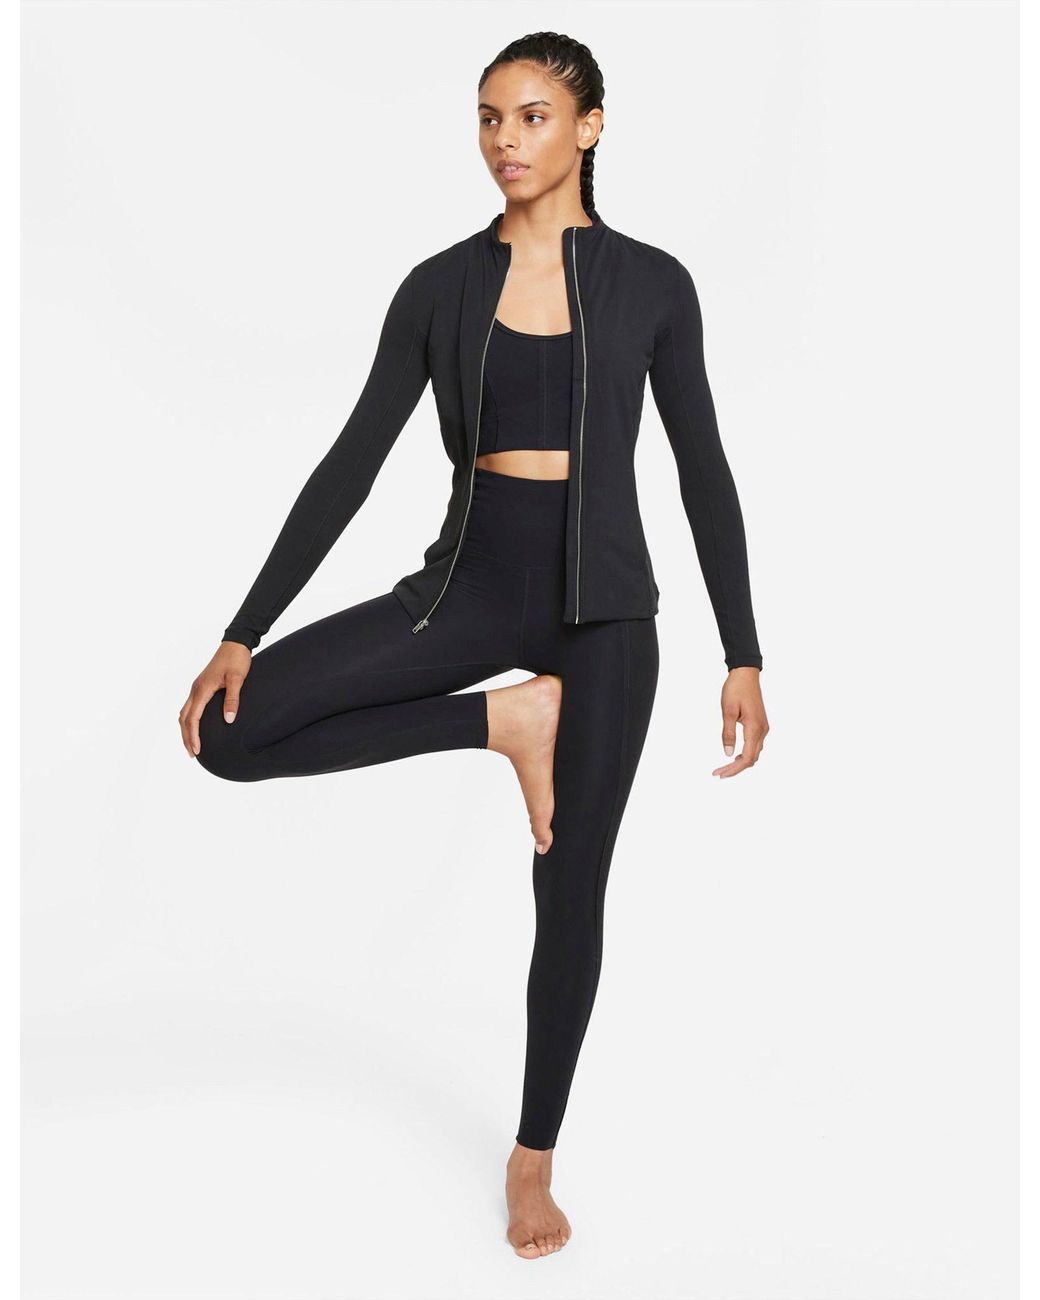 Nike Yoga Luxe Dri-fit Jacket in Black | Lyst